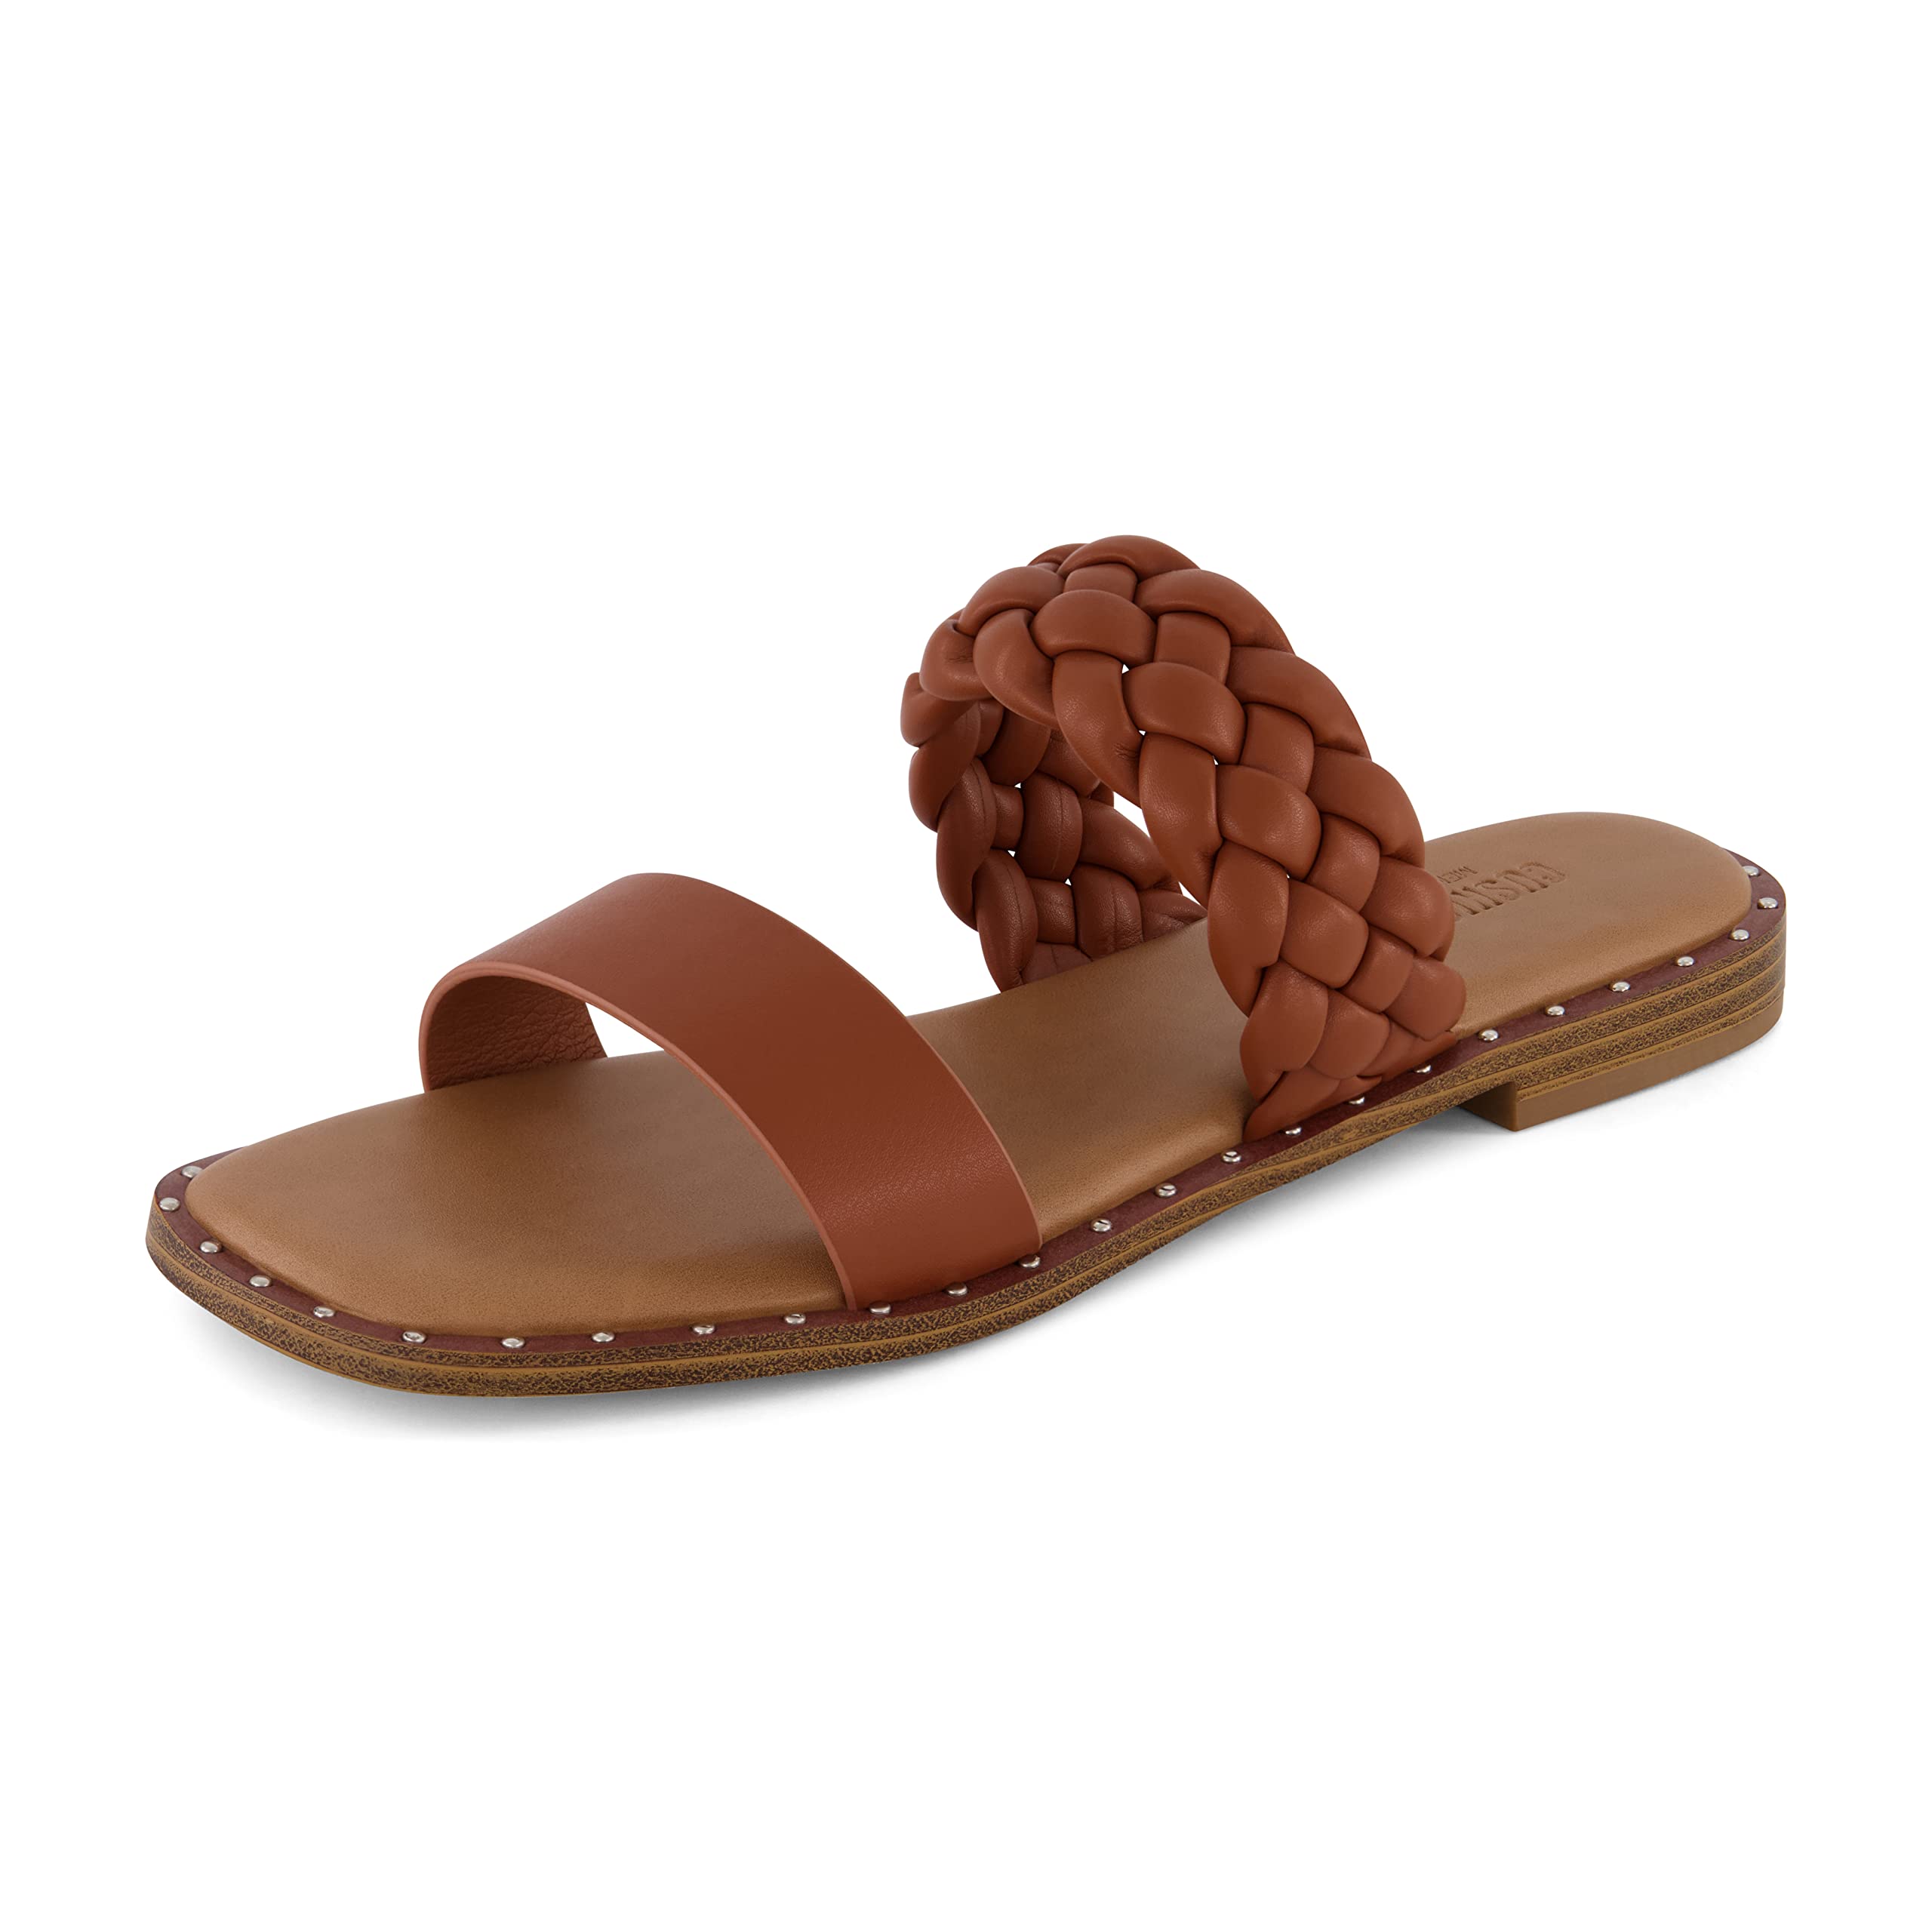 Cushionaire + Braided Slide Sandal